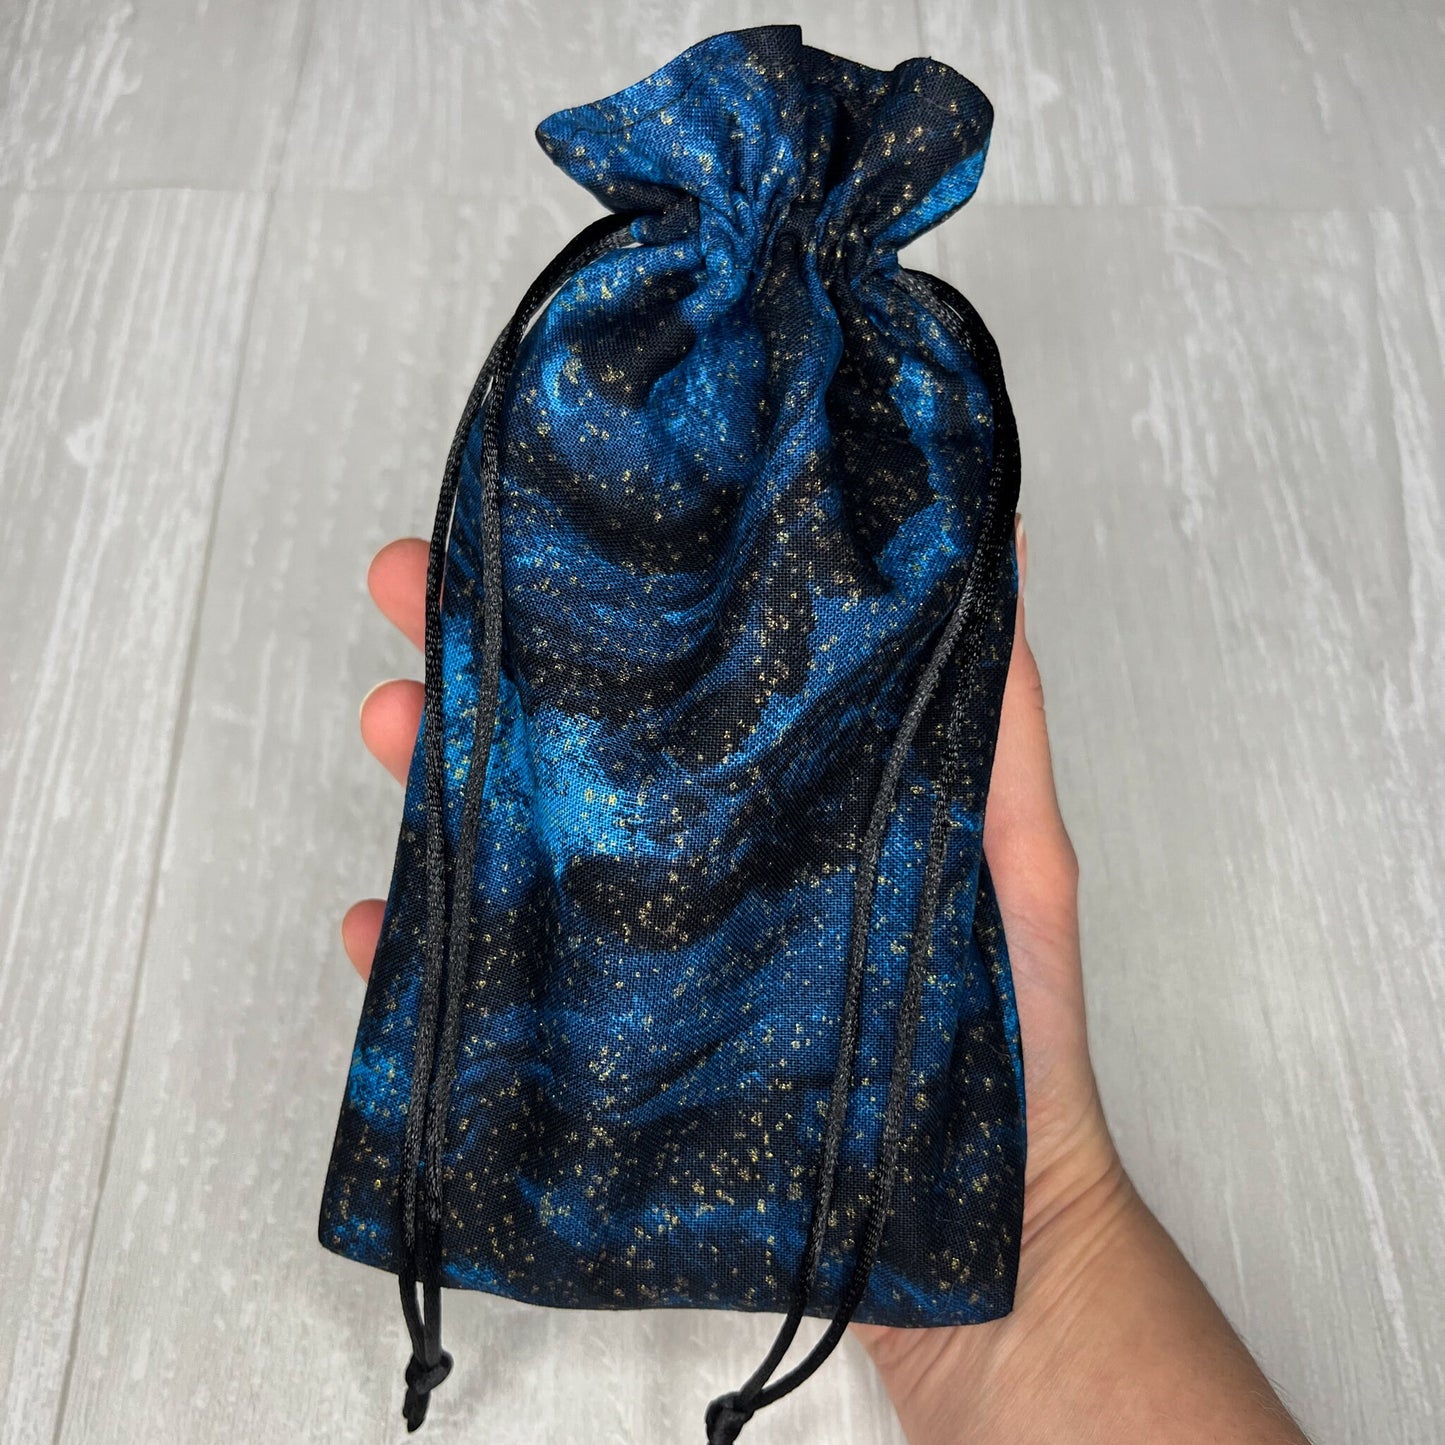 Standard Sized Blue & Black Galactic Drawstring Bag